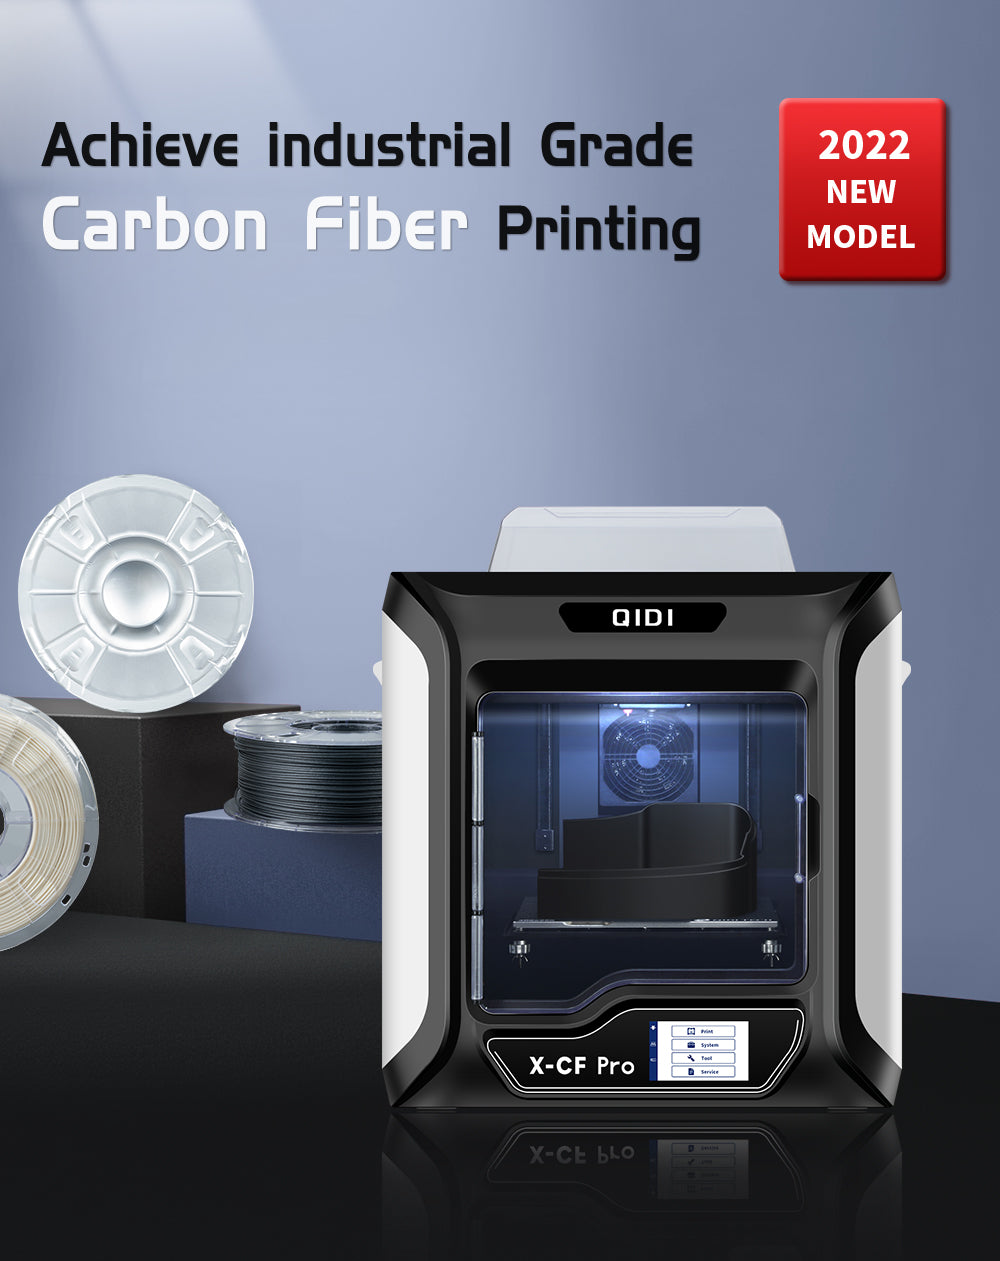 qiditech QIDITECH xcfpro x-cf pro 3dprinternational 3d printer